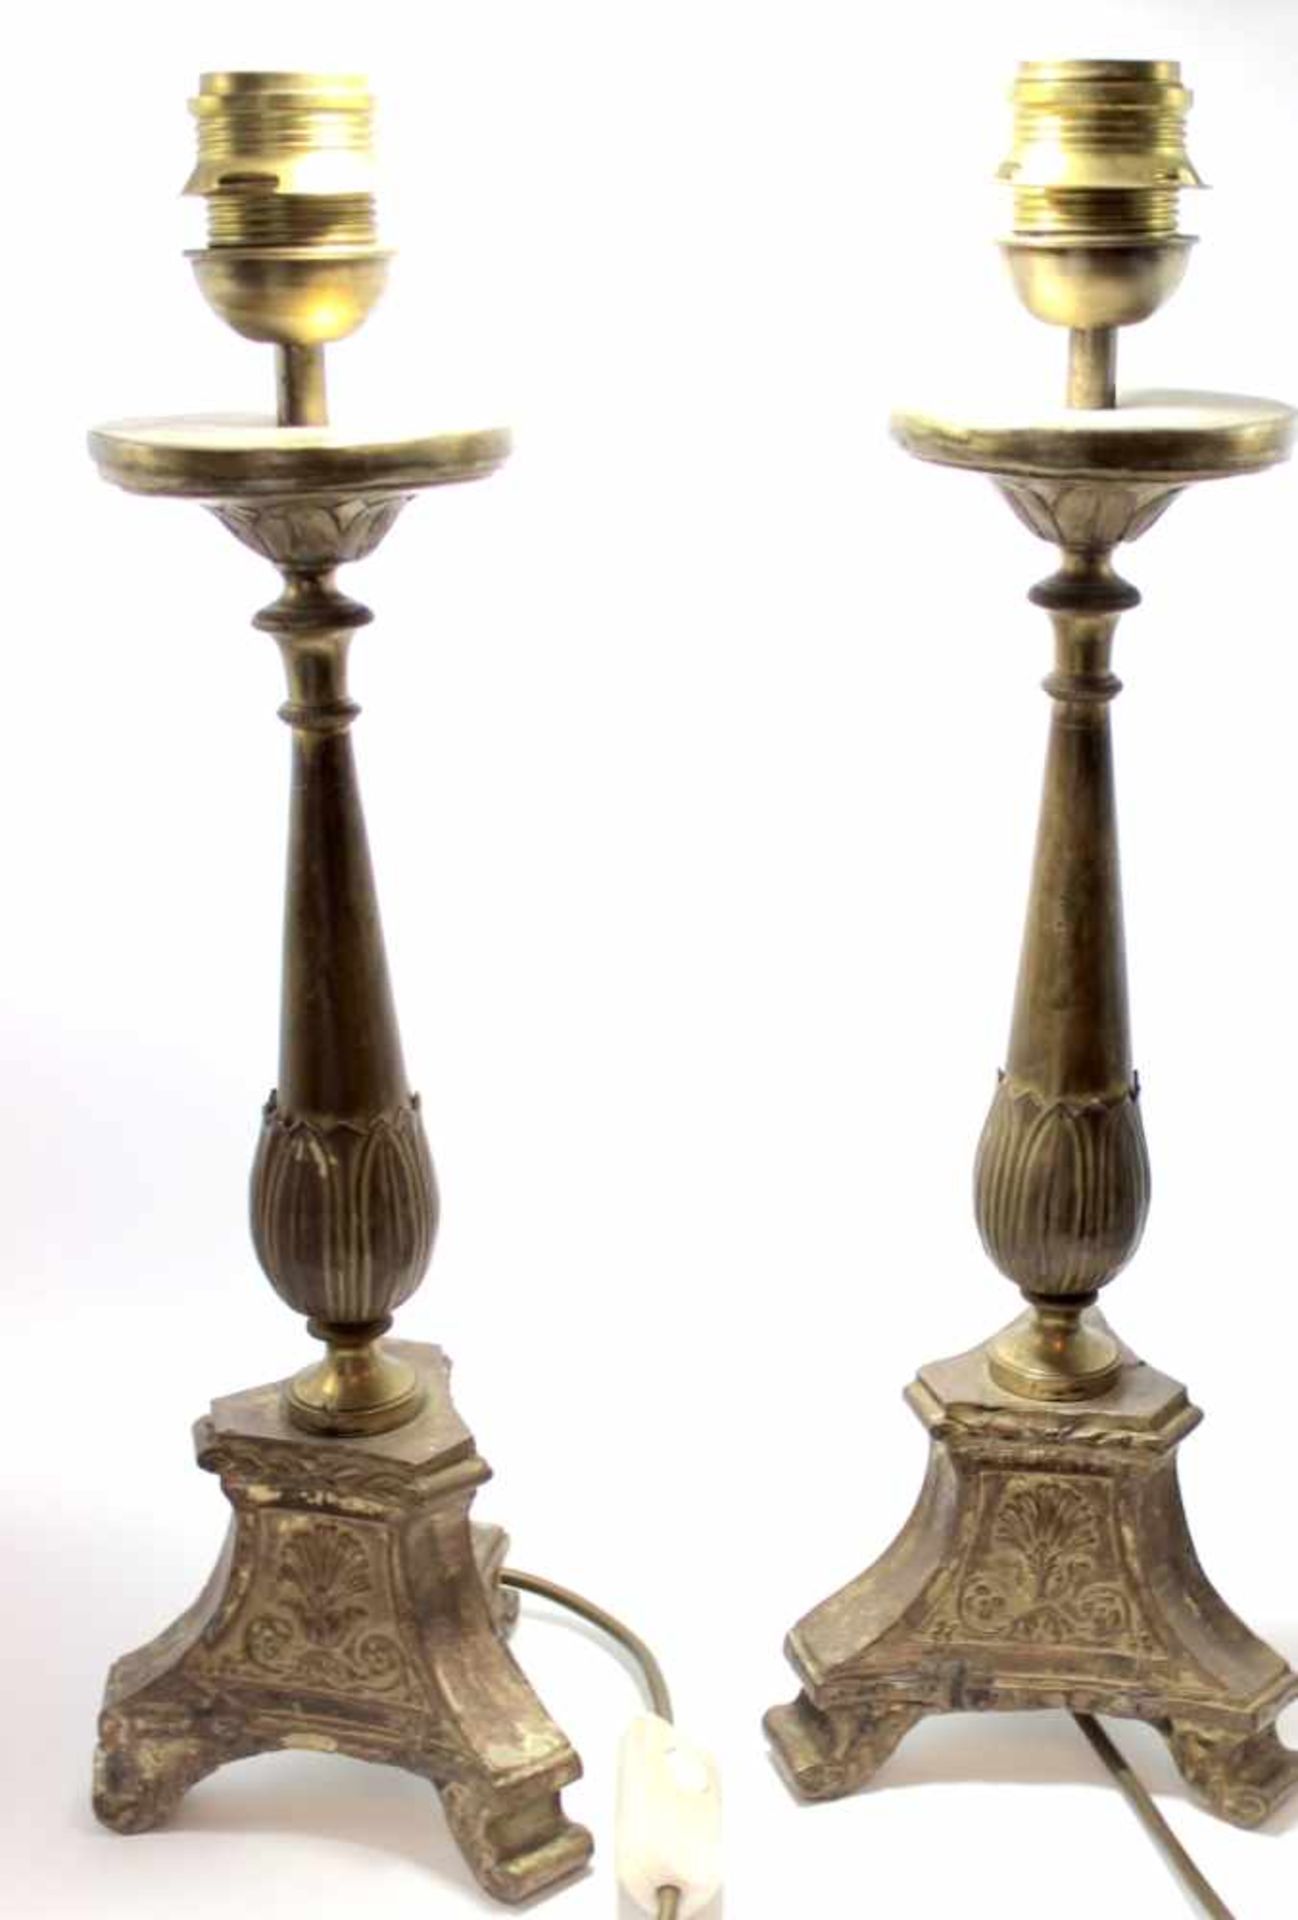 Paar Tischlampen - 19.Jahrhundert ehem. Kerzenleuchter, Messing, floral verziert, später